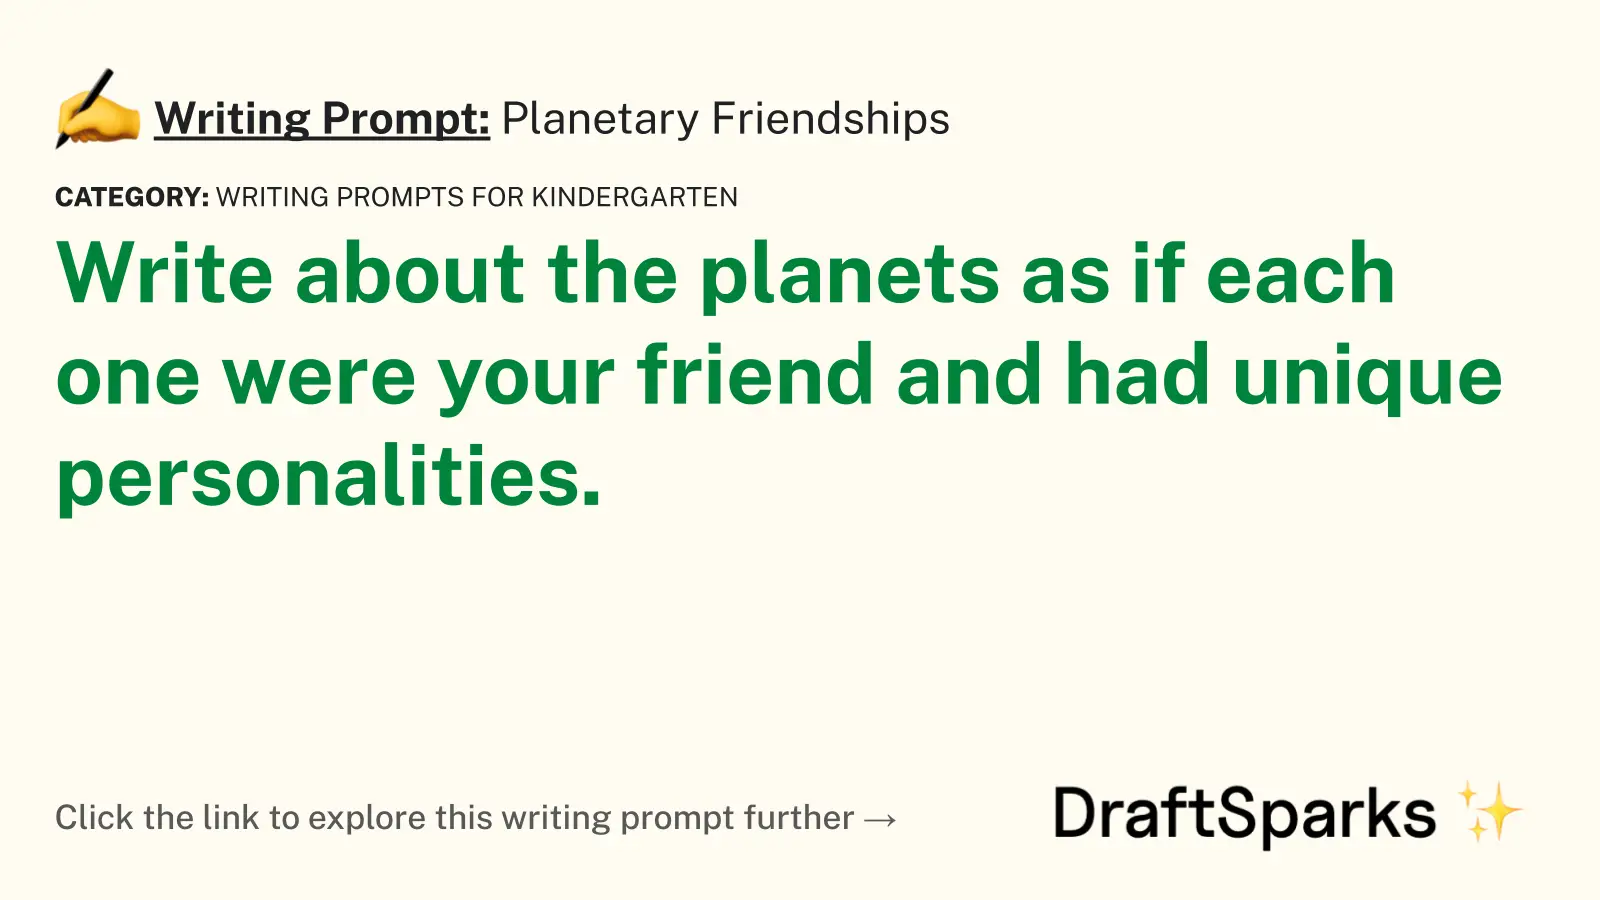 Planetary Friendships